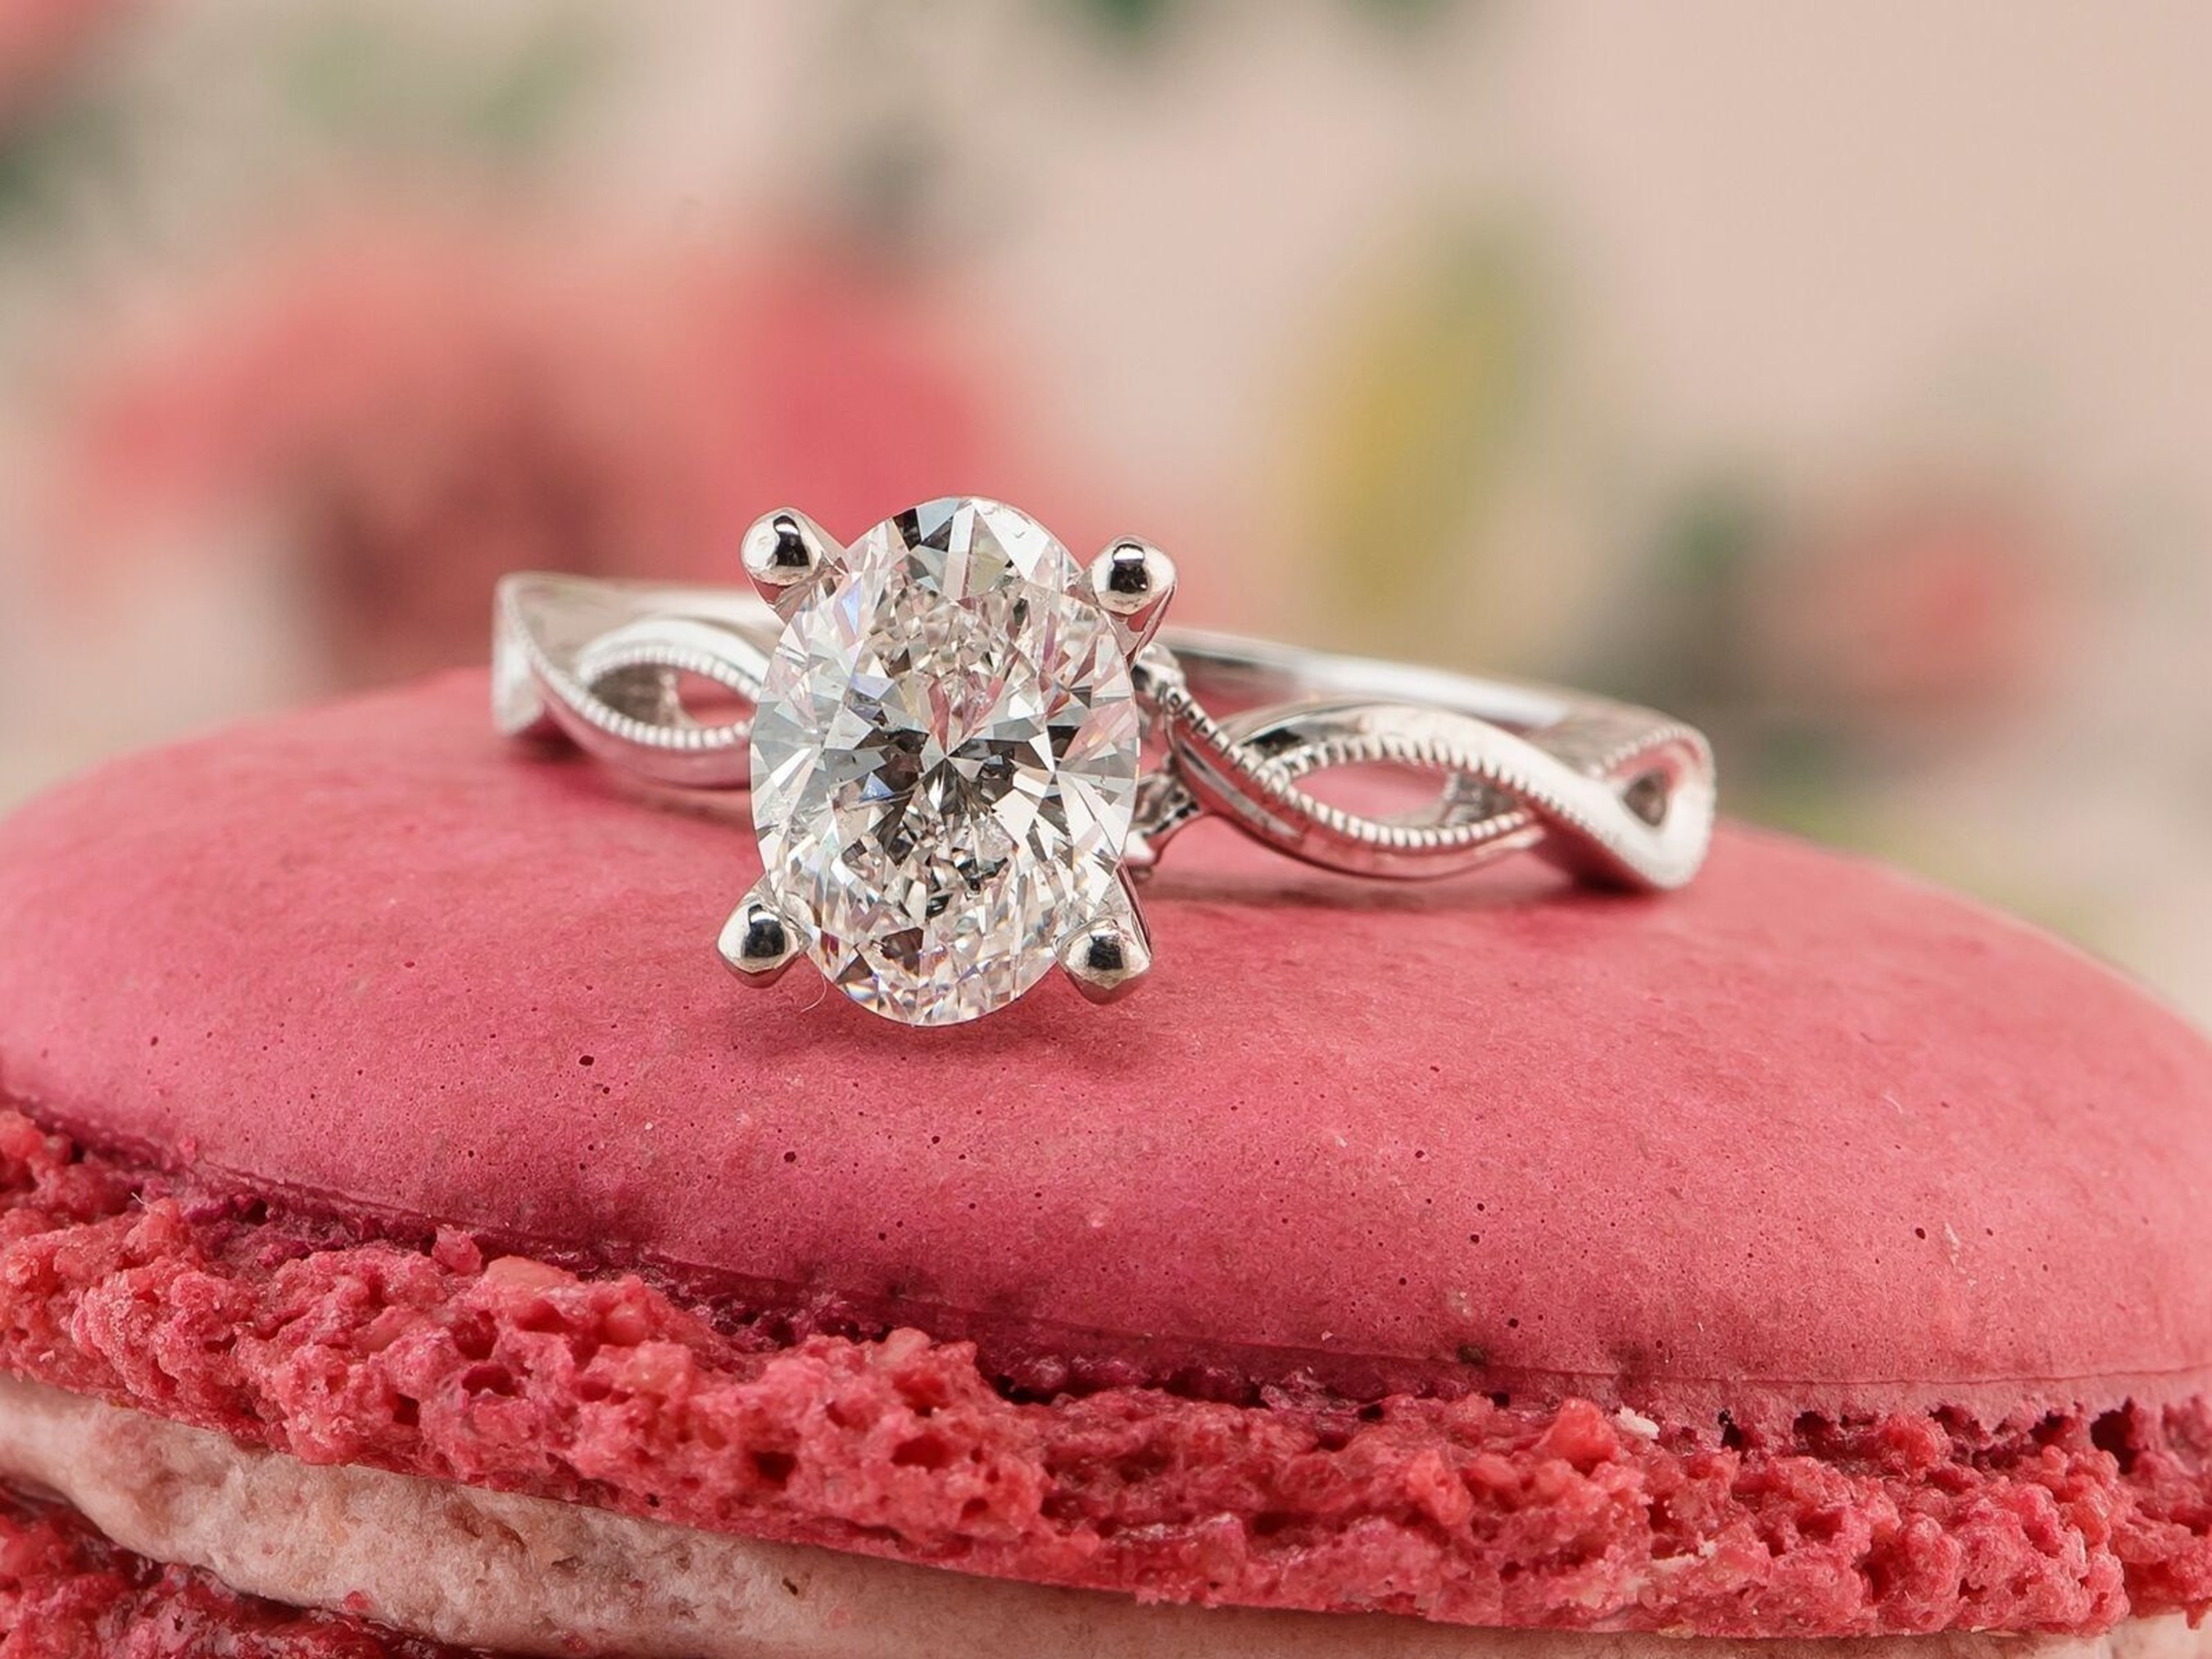 Shane Co. Oval Diamond Engagement Ring - Seven Engagement Rings for Christmas 2016